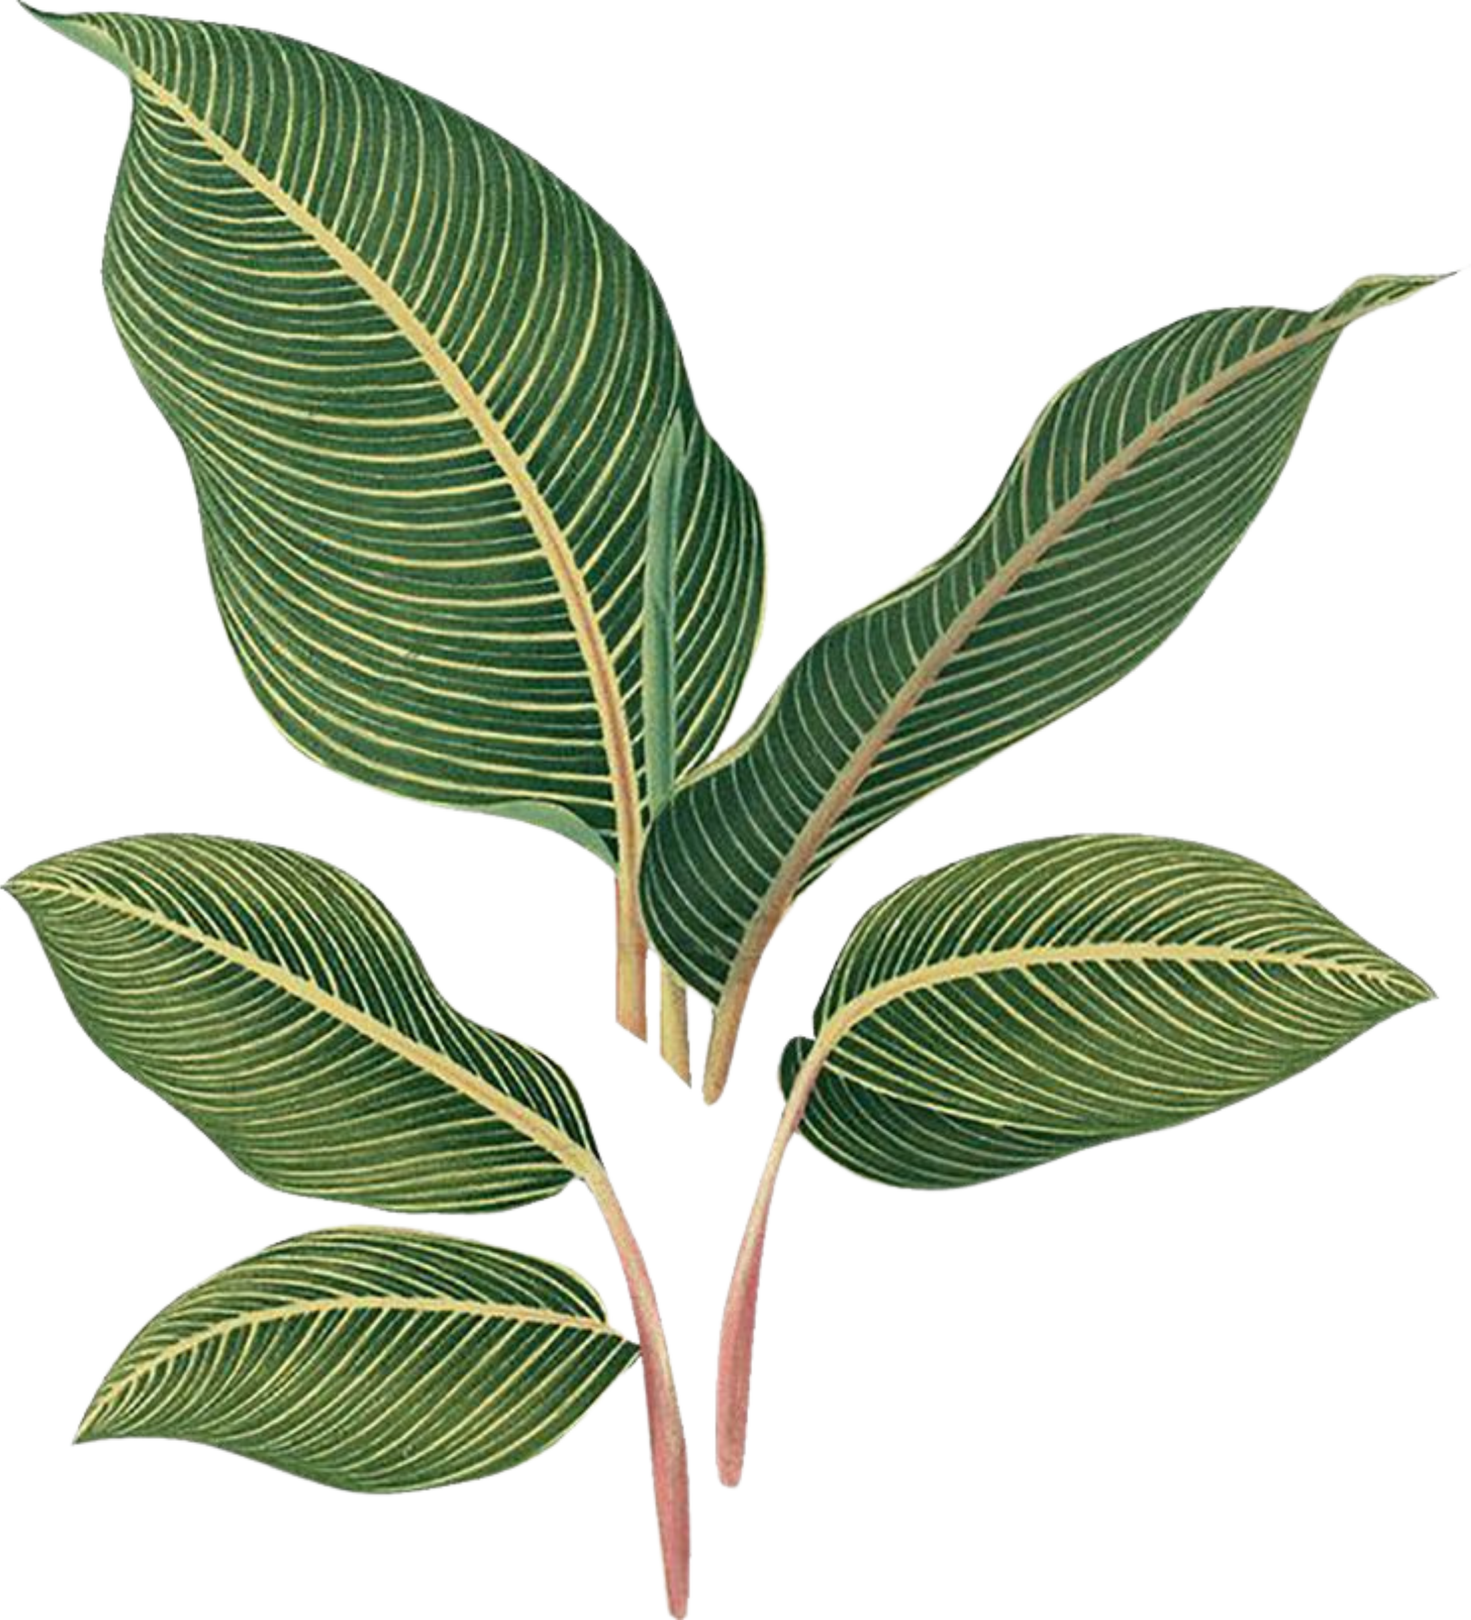 Plant Leaves Illustration 